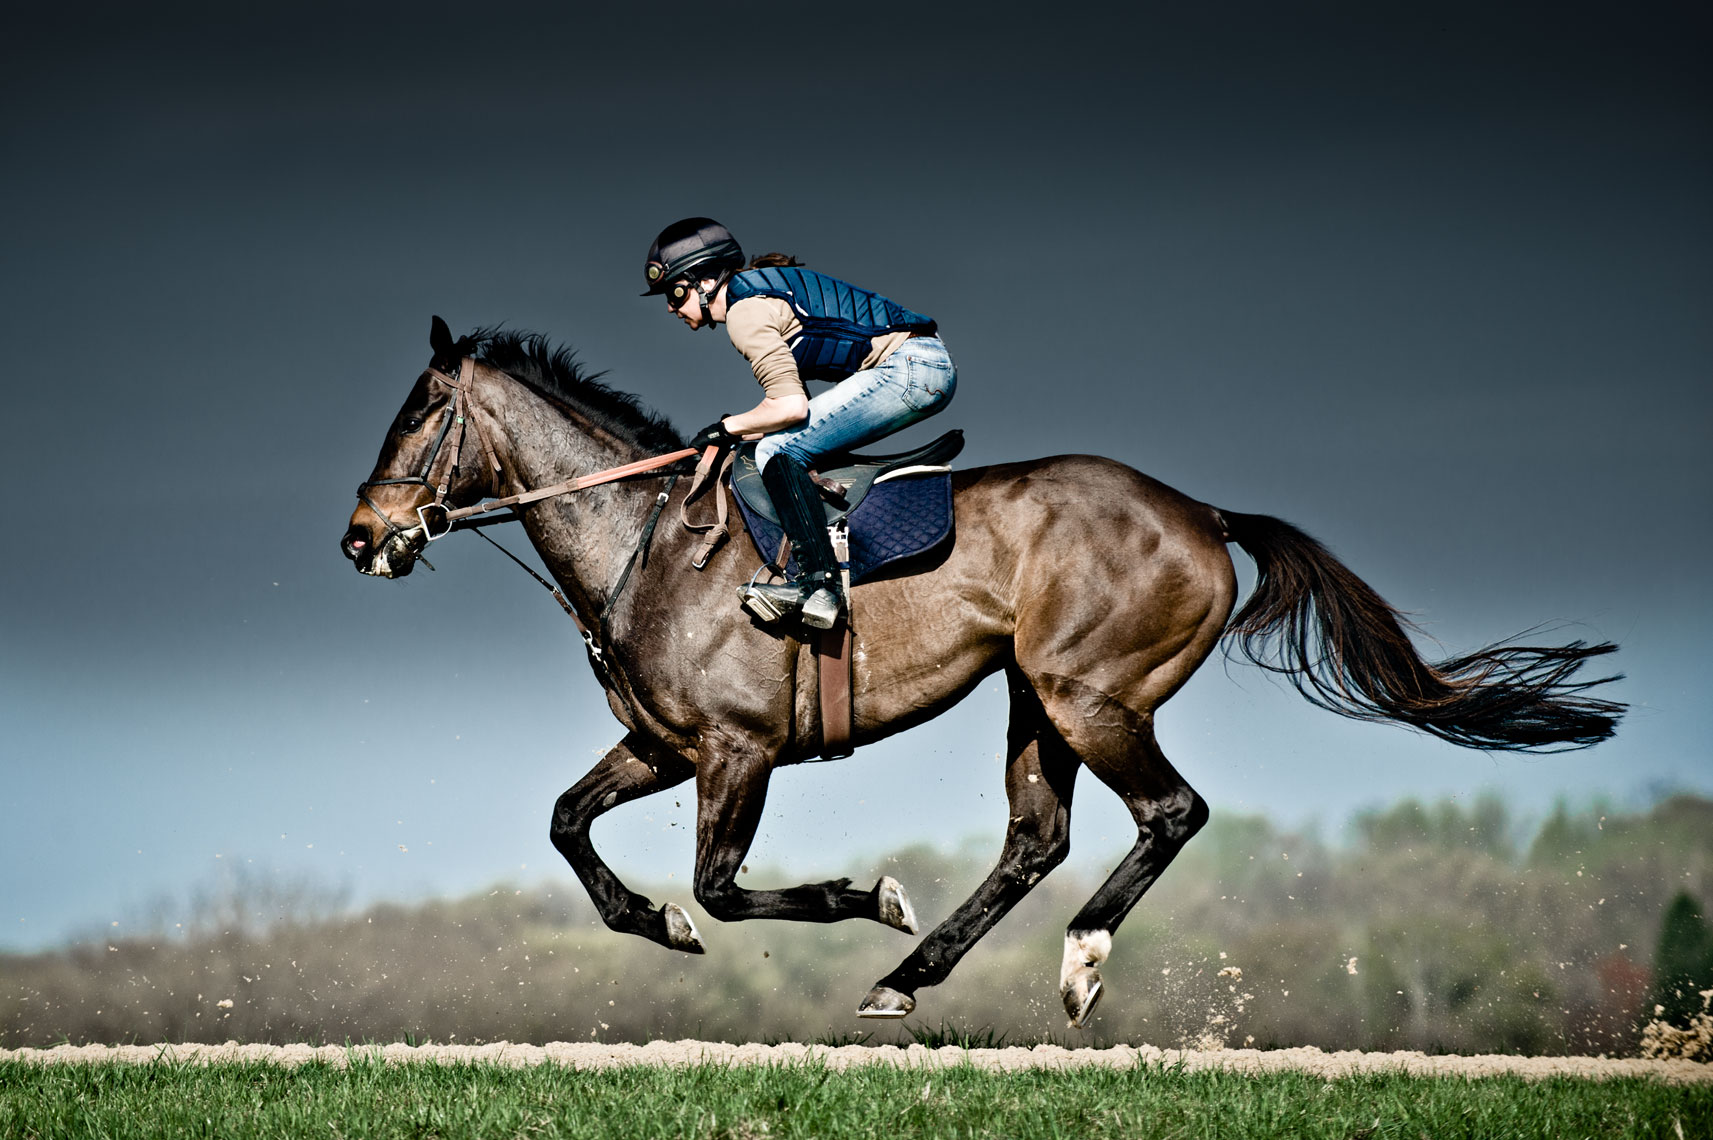 Female jockey riding on a muscular race horse